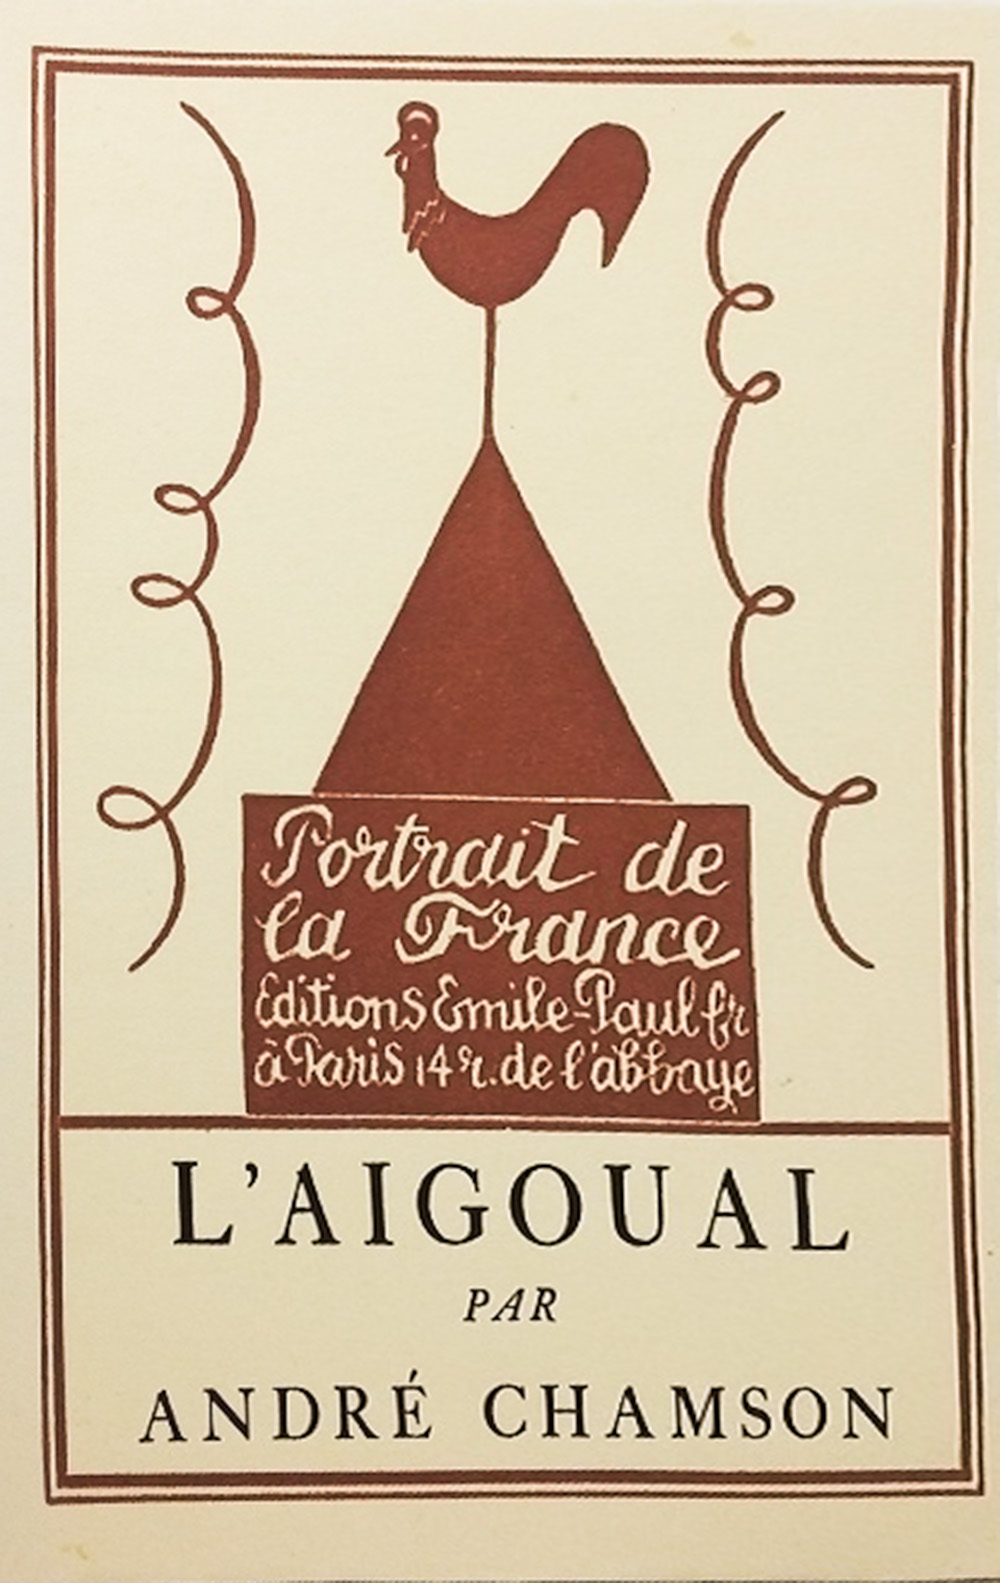 L'Aigoual - Emile-Paul 1930